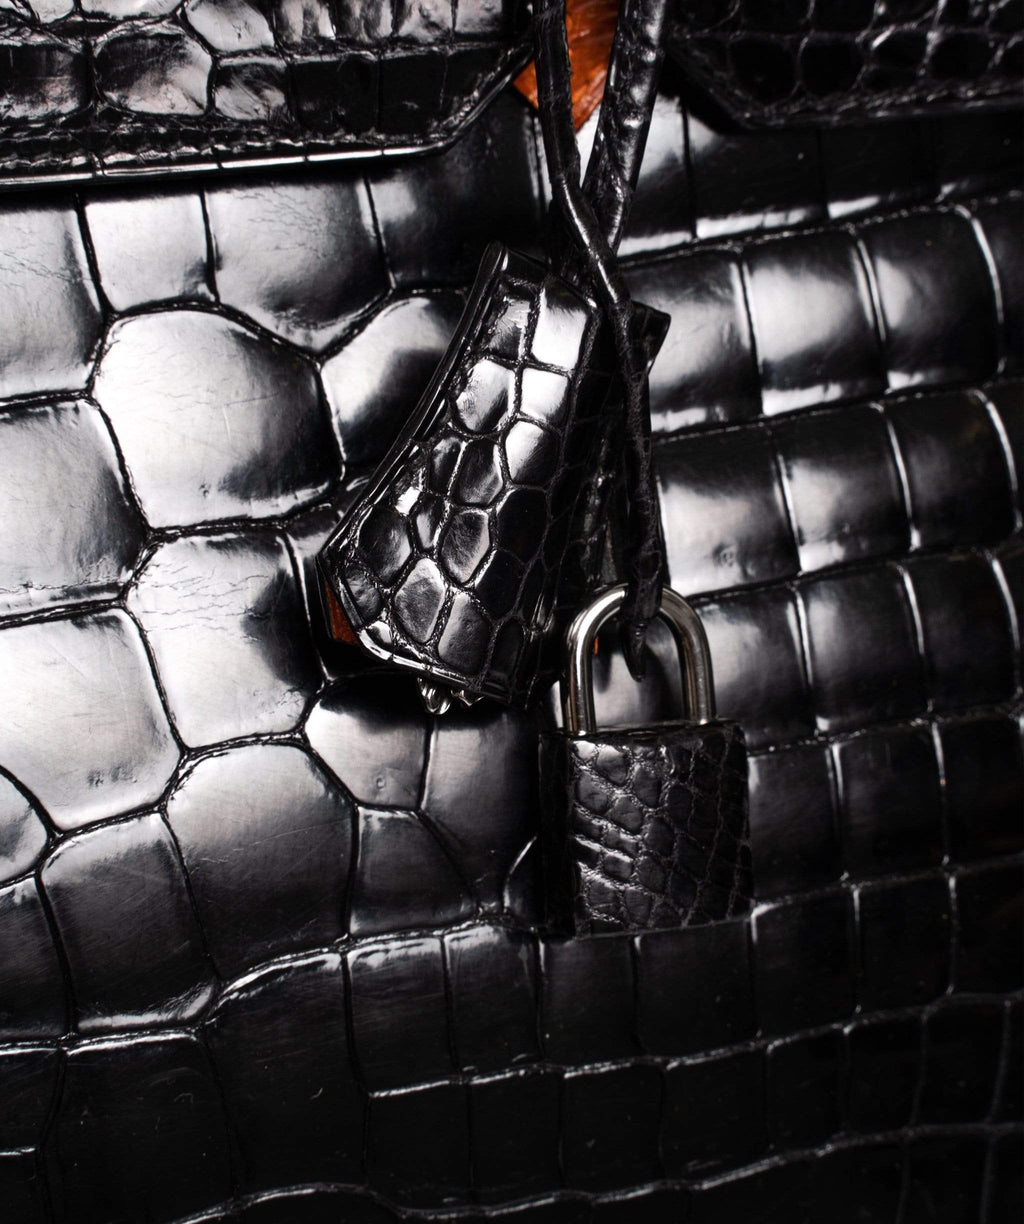 Hermès Birkin 35 Black Porosus Crocodile Bag GHW